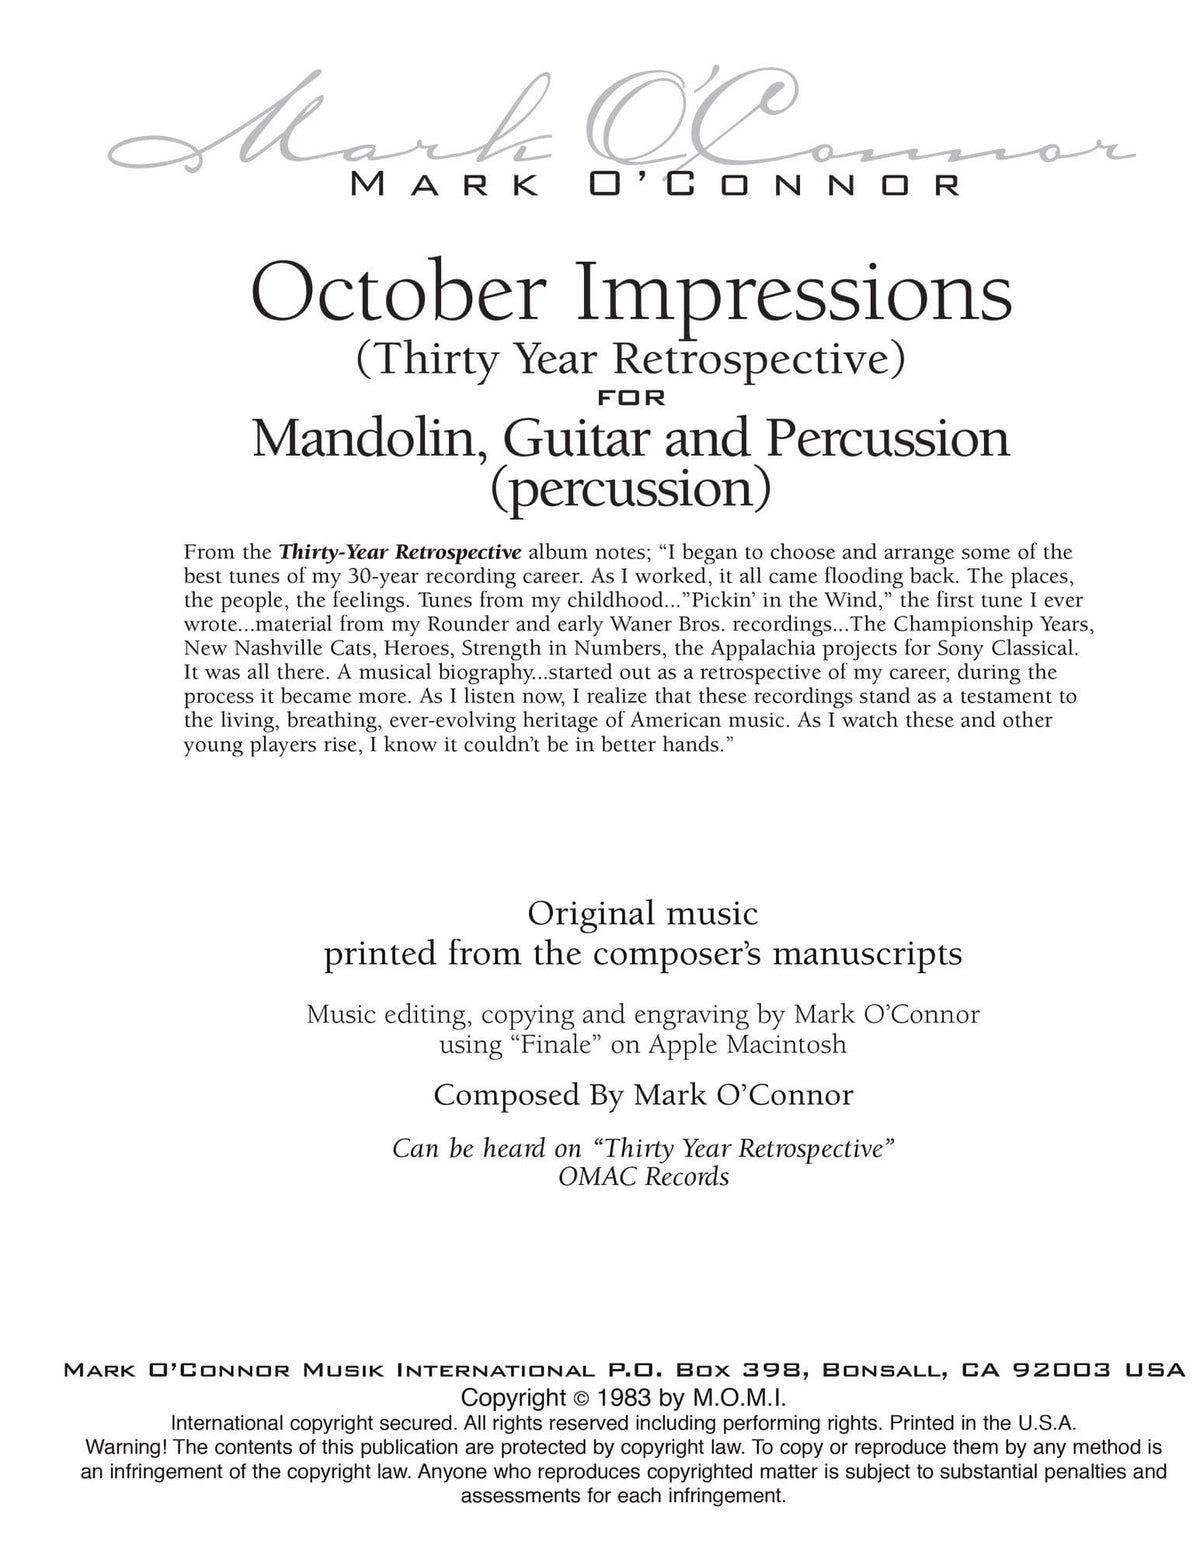 O'Connor, Mark - October Impressions for Mandolin, Guitar, and Percussion - Percussion - Digital Download